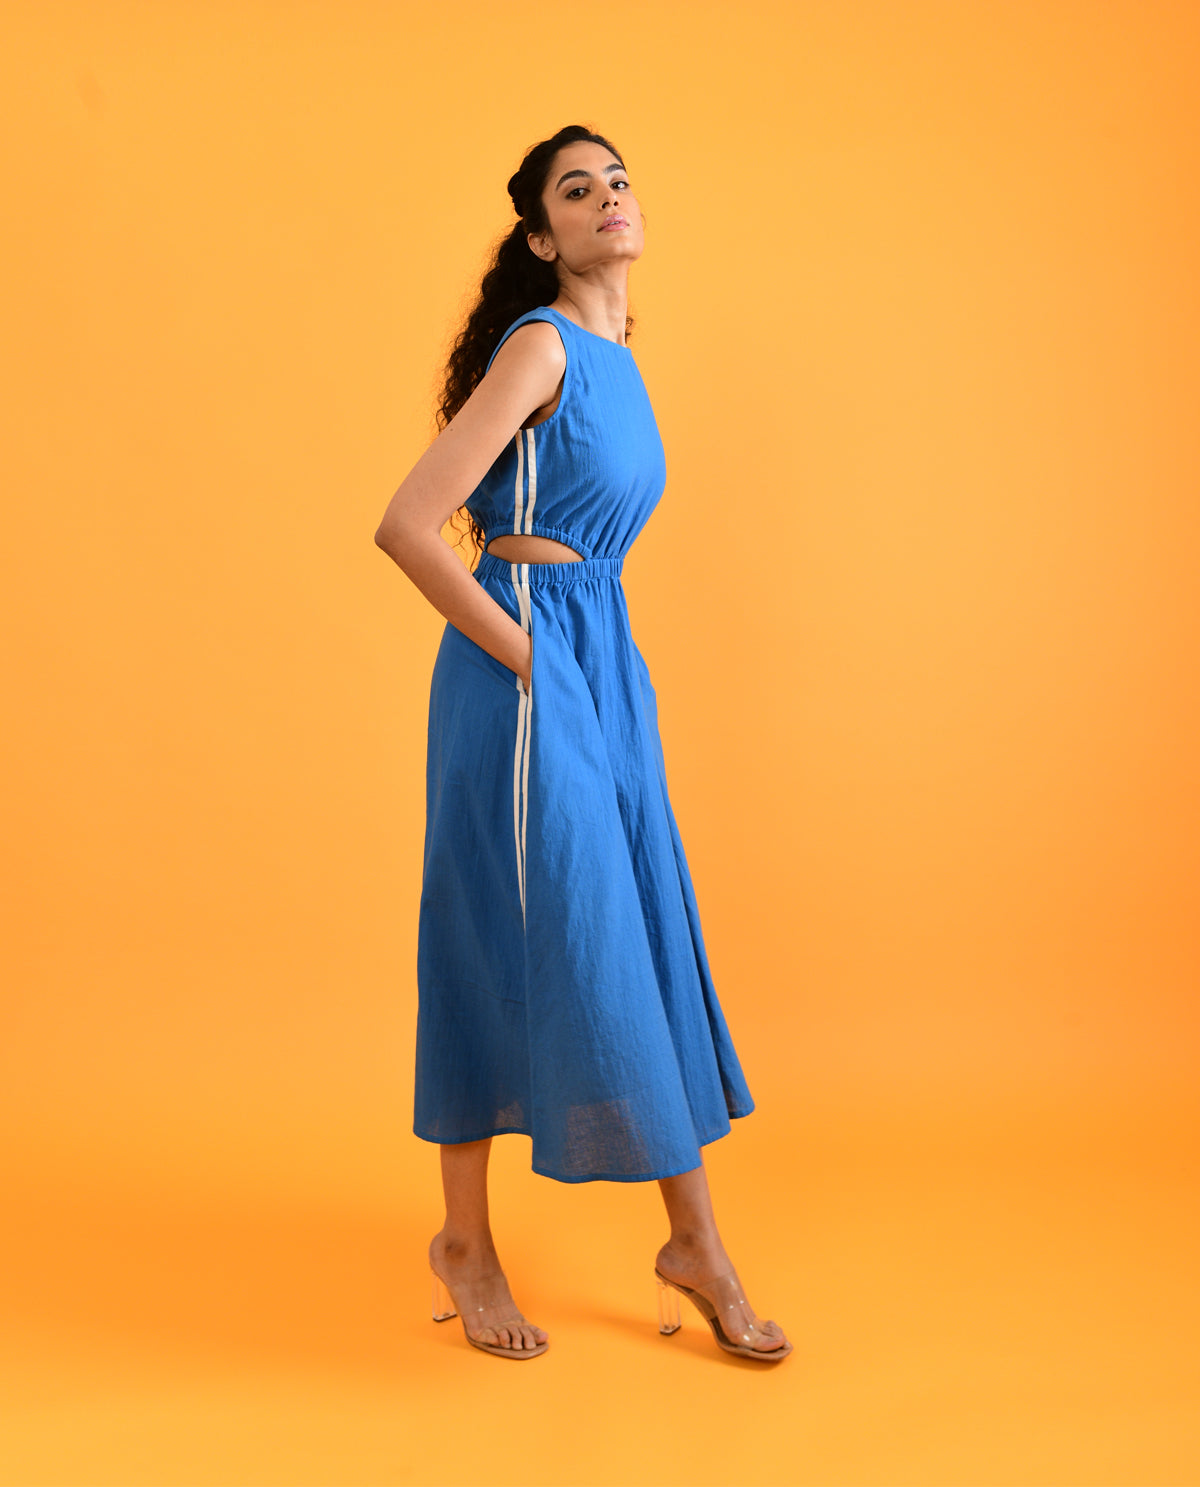 Blue Midi Dress at Kamakhyaa by Rias Jaipur. This item is Blue, Casual Wear, Cut Out Dresses, Handloom Cotton, Handspun, Handwoven, Hue, Midi Dresses, Sleeveless Dresses, Slim Fit, Solids, Stripes, Womenswear